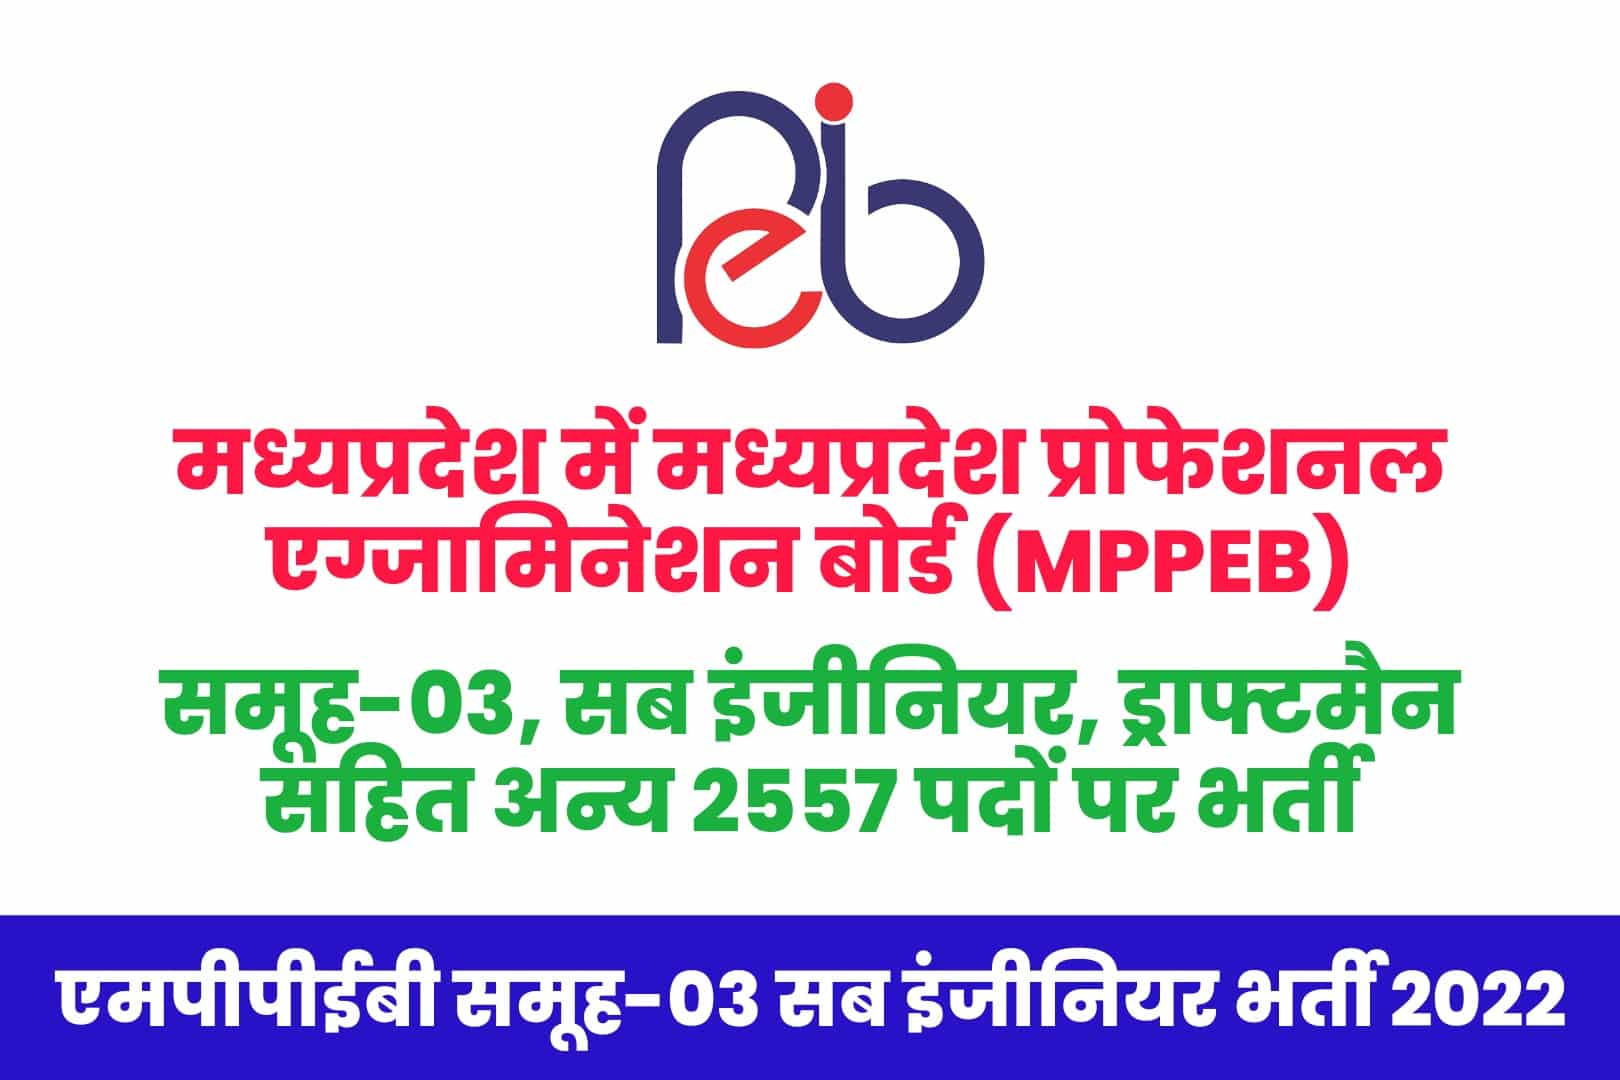 MPPEB Group 3 Sub Engineer Recruitment 2022